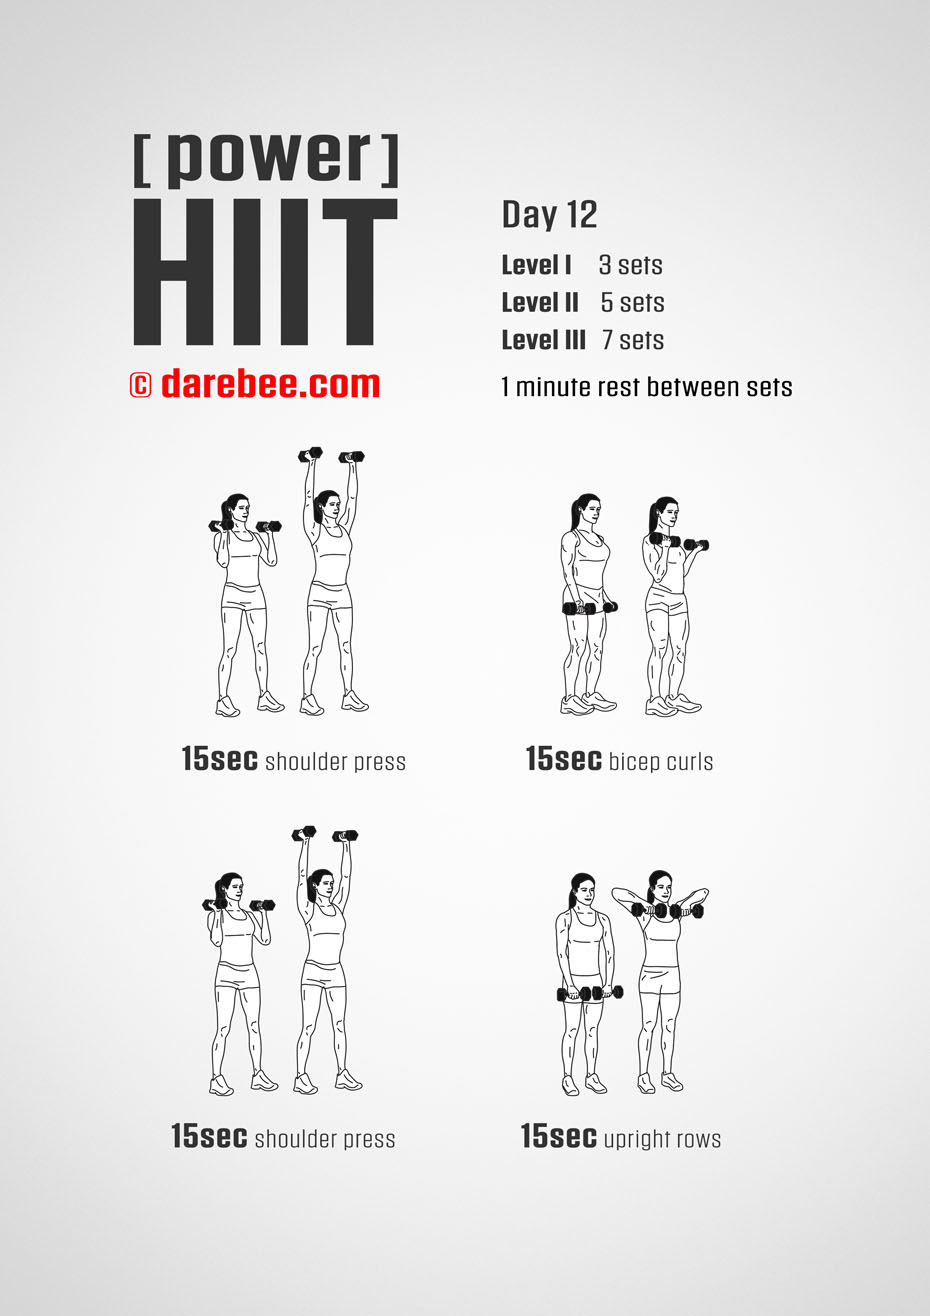 Power HIIT - Dumbbells  Fitness Program by DAREBEE